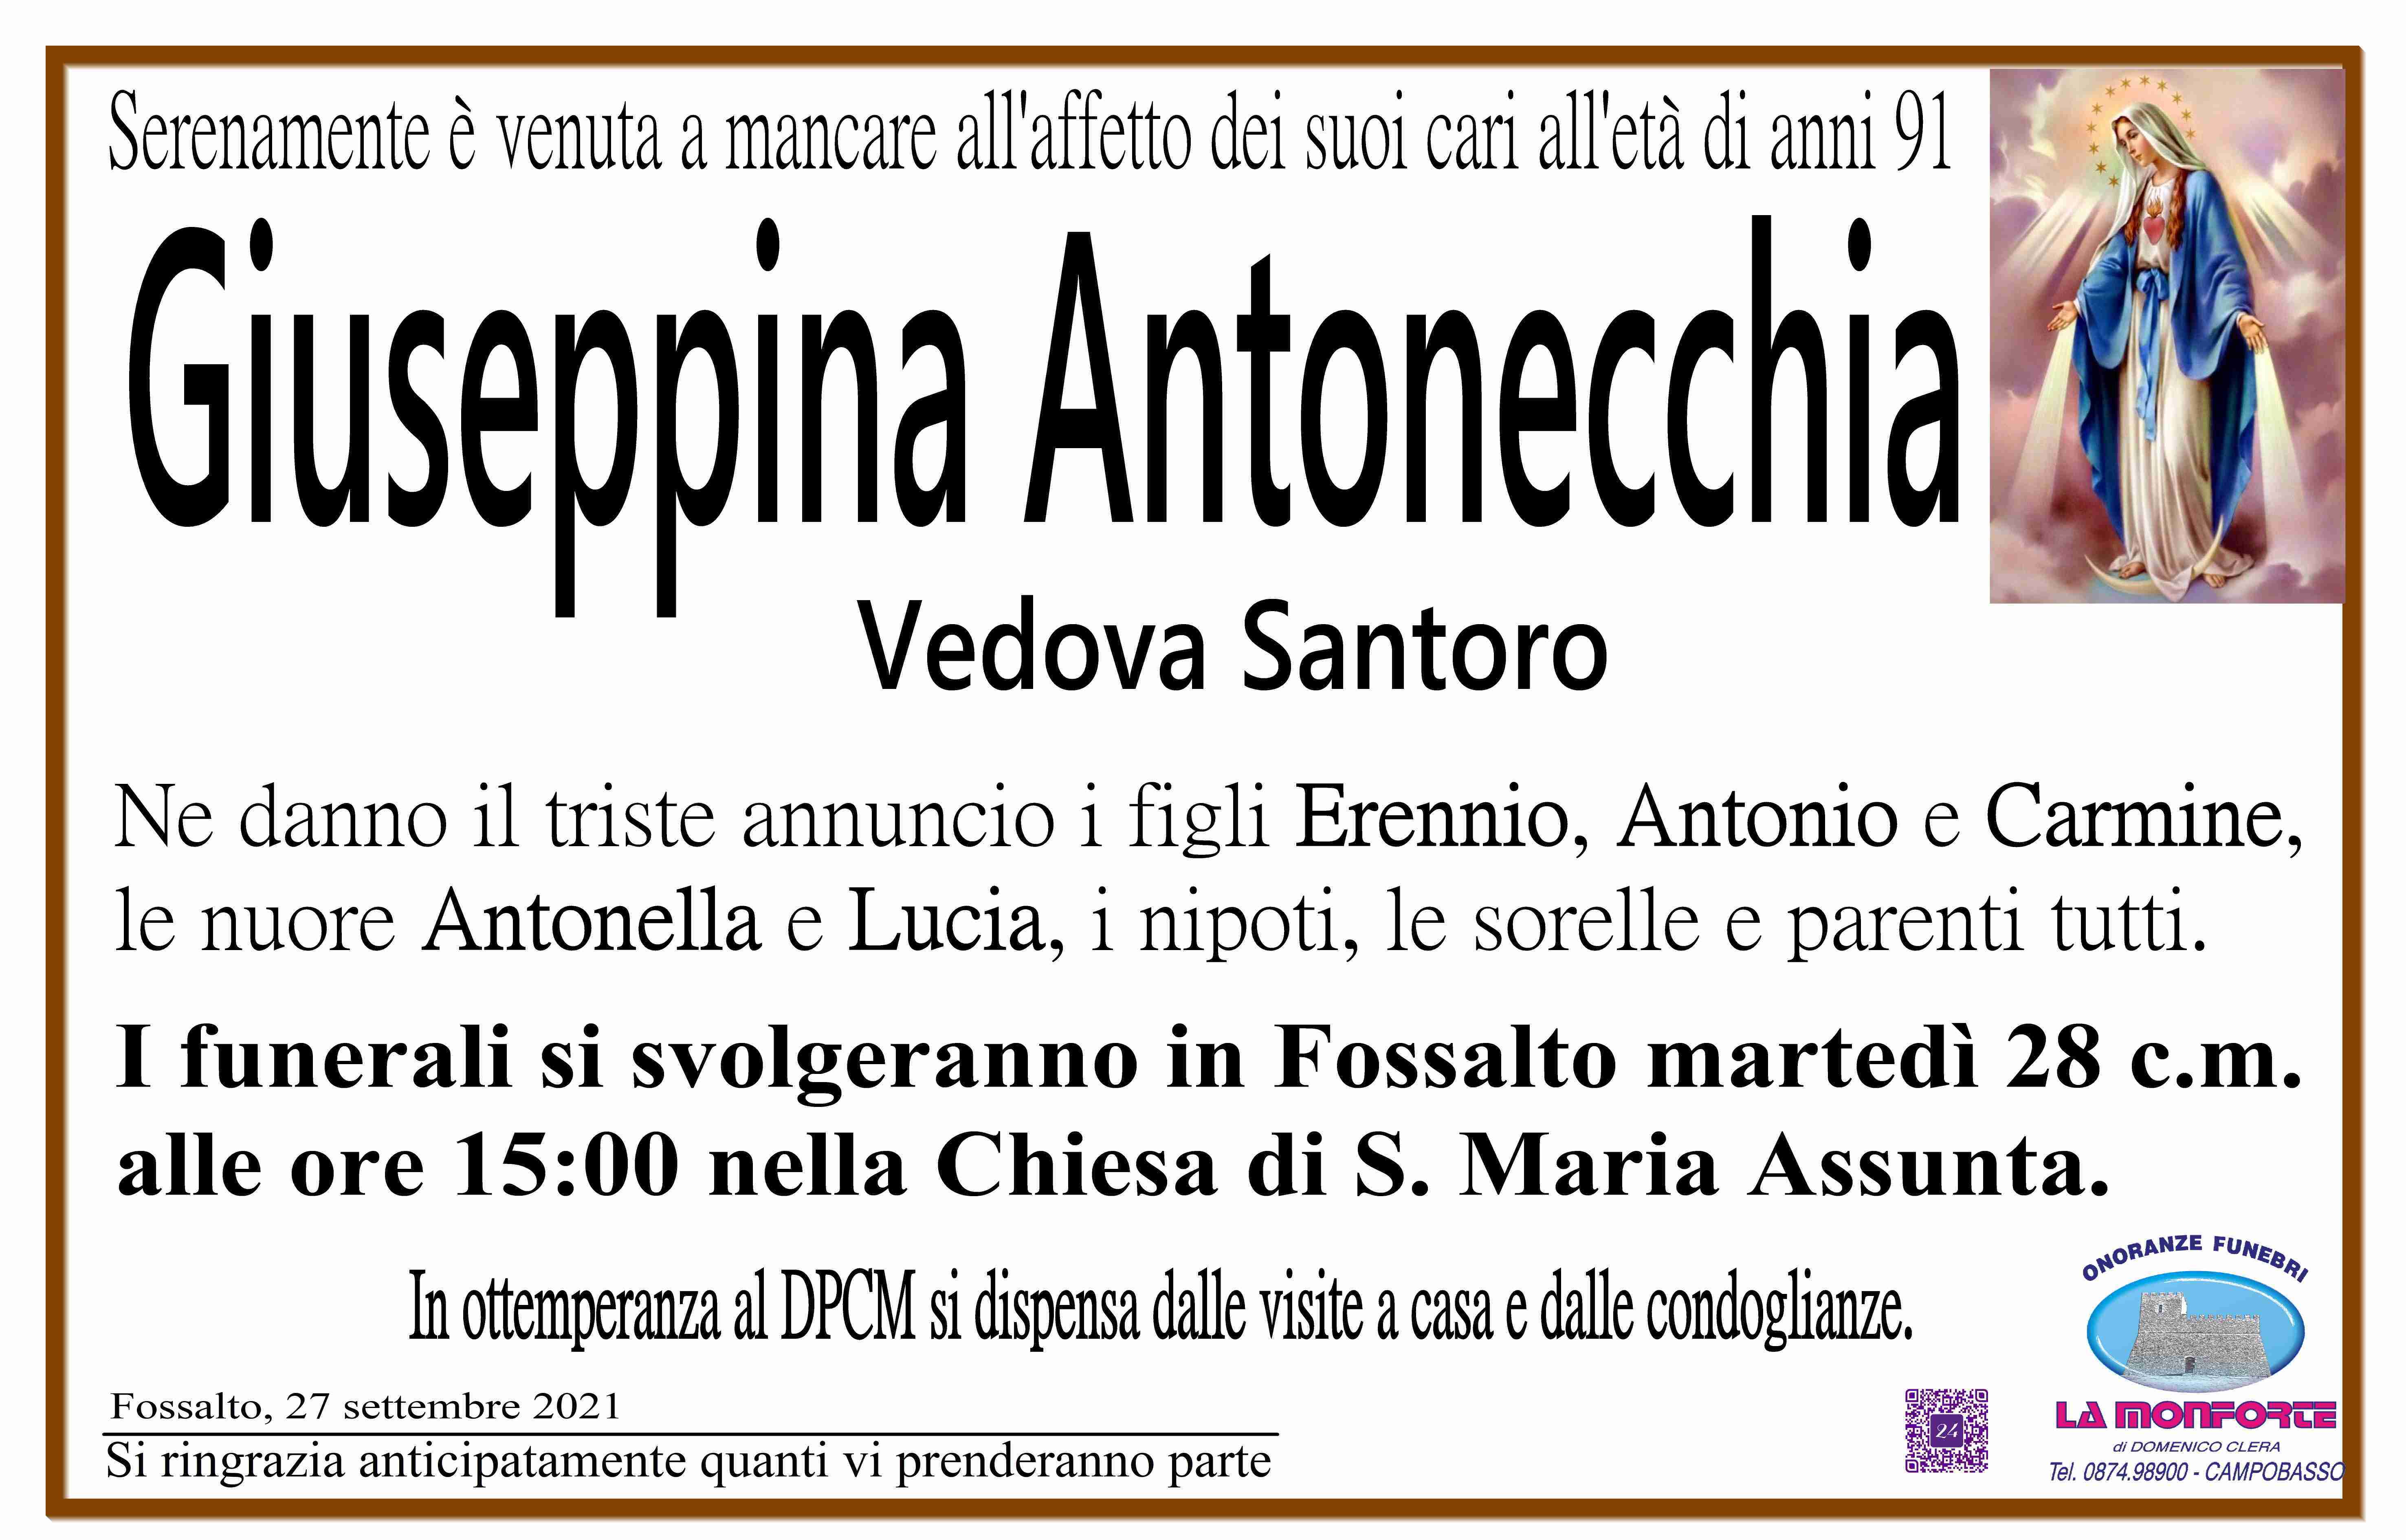 Giuseppina Antonecchia